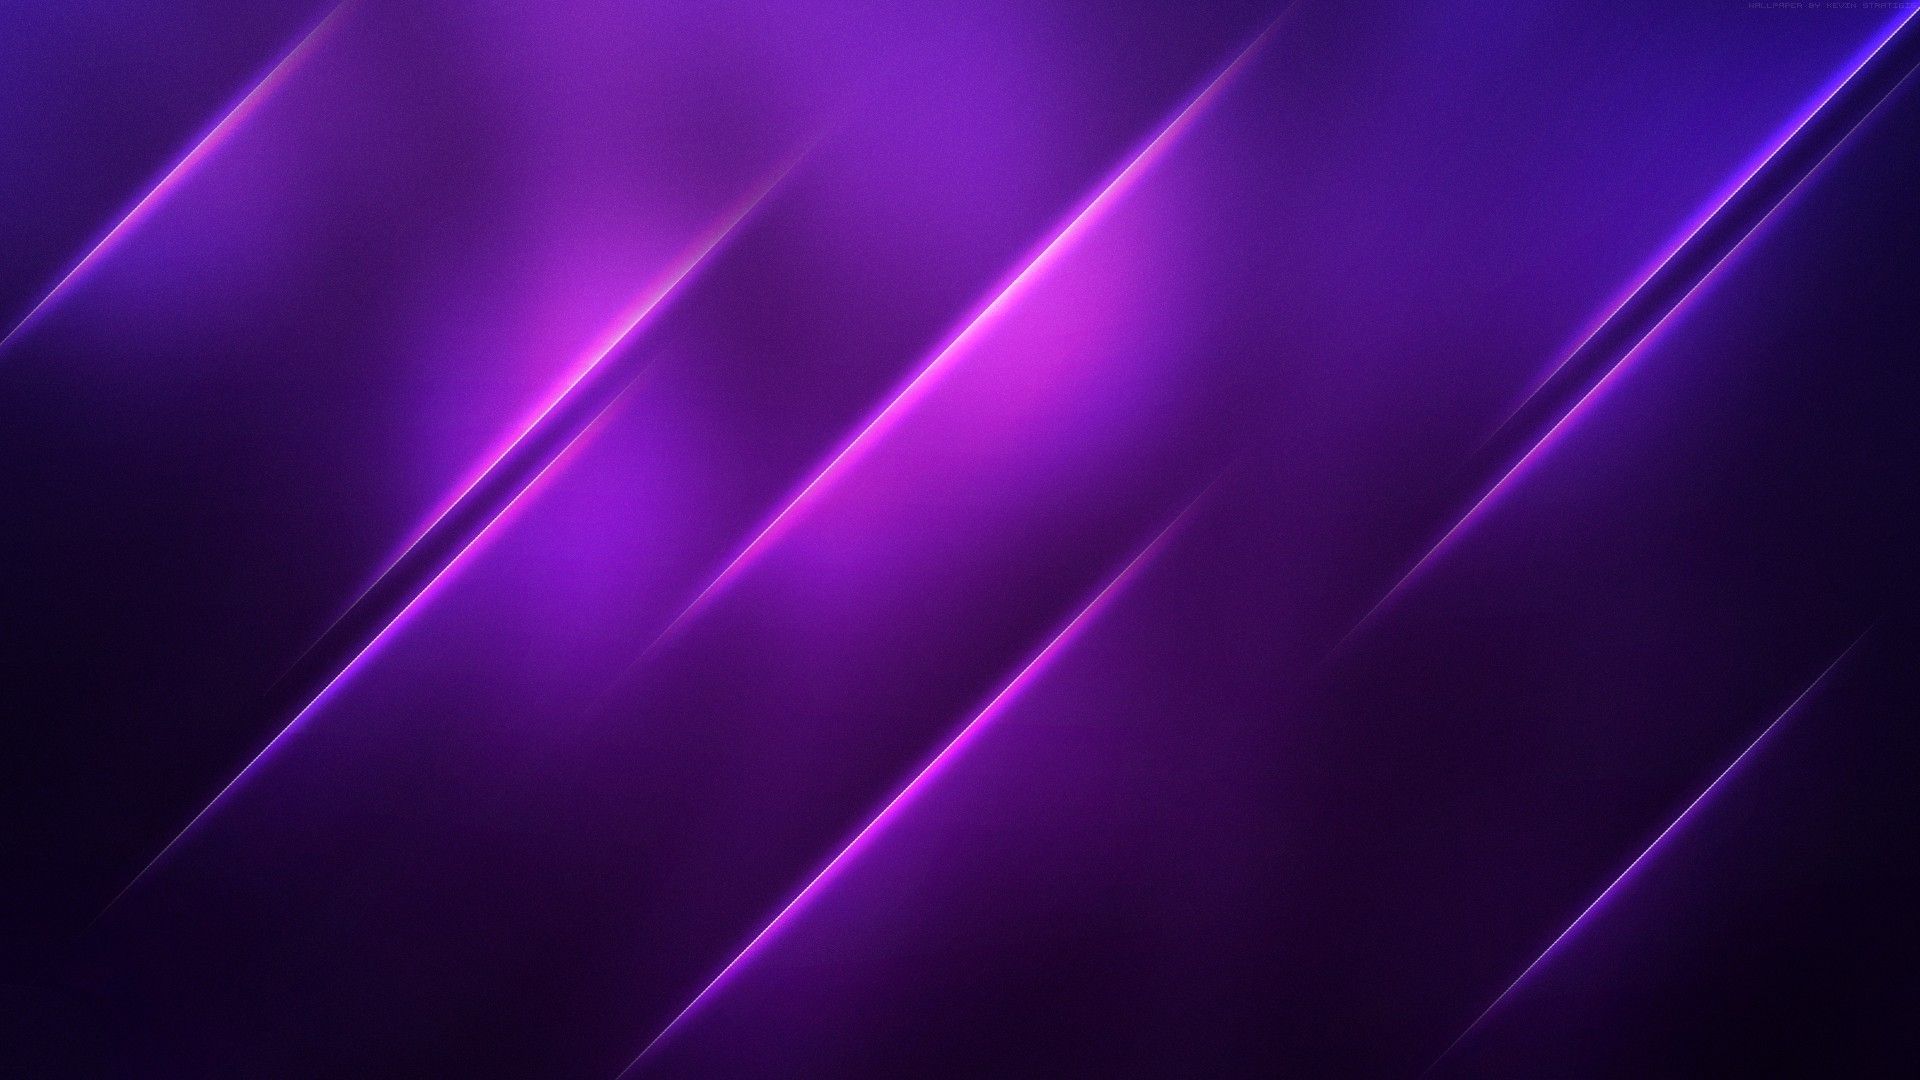 Computer Wallpaper, Desktop Background Purple Background, 1002.8 KB